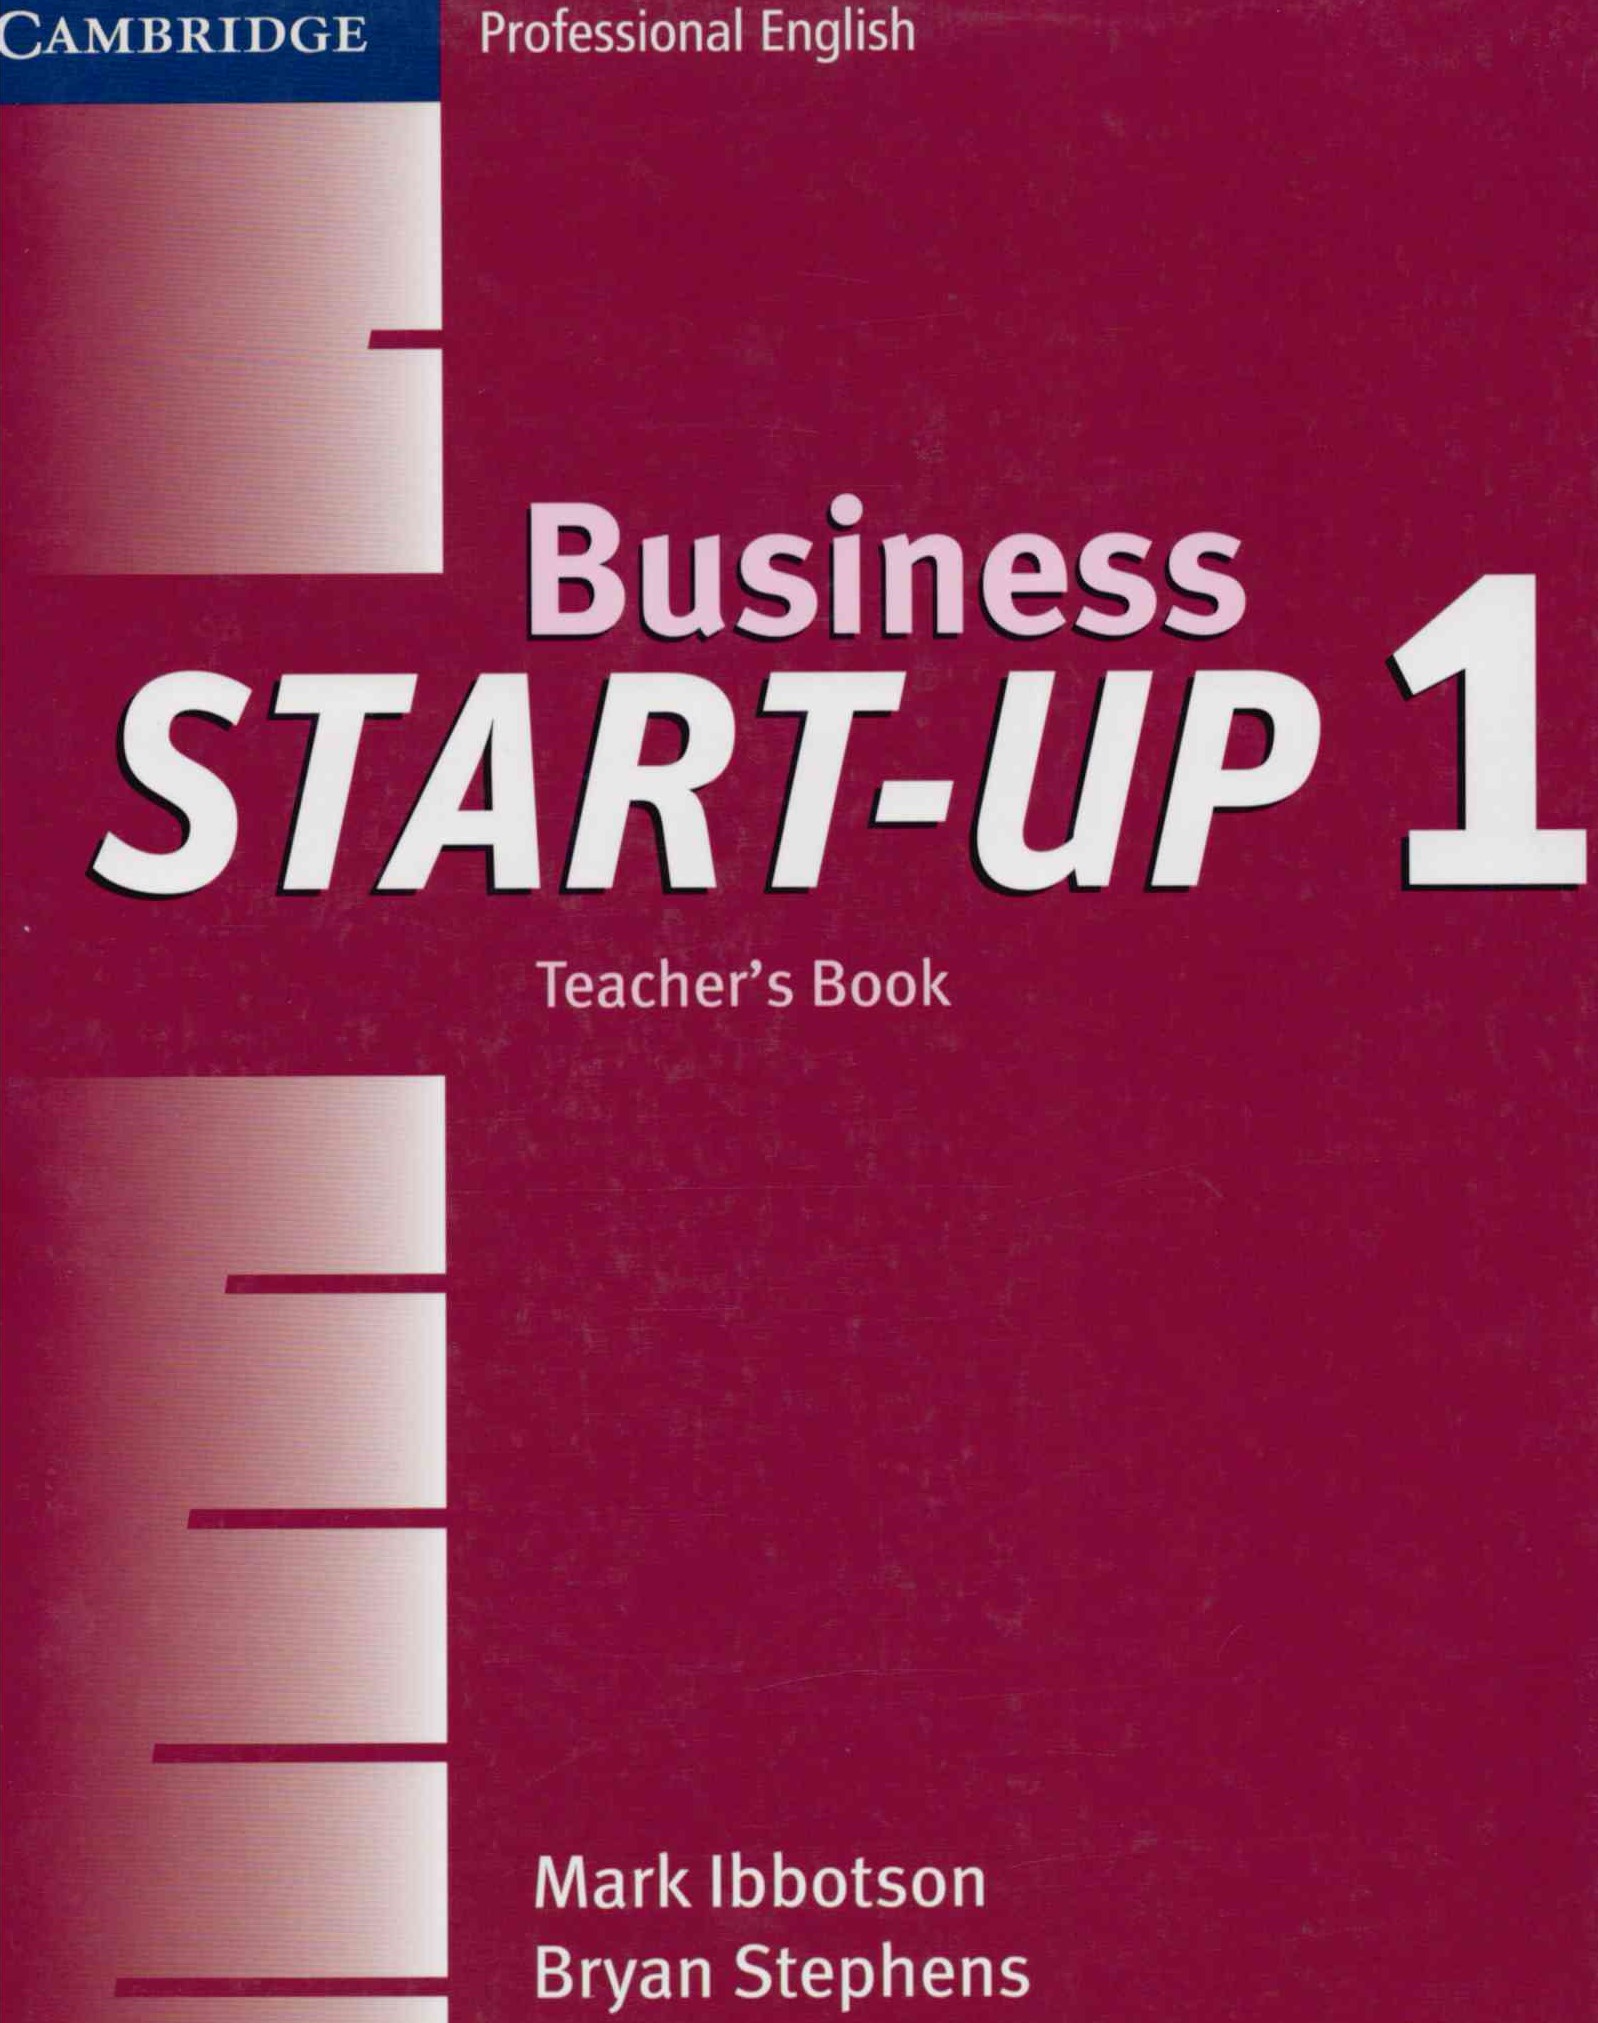 Cambridge teachers book. Startup книга. Start English учебник. Business English учебник teacher book. Бизнес английский книга.